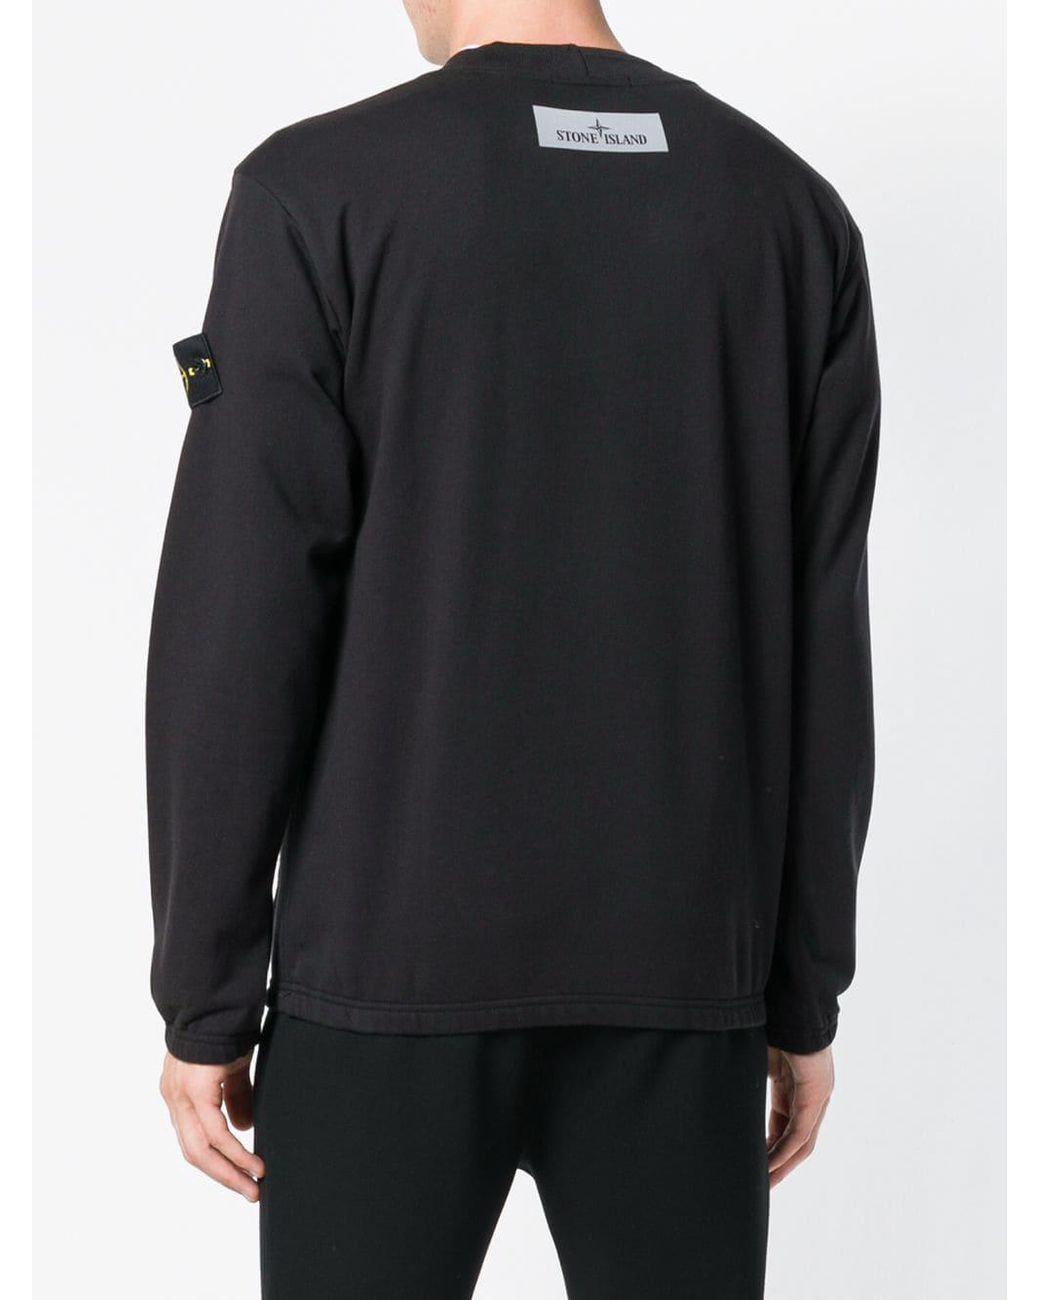 Stone Island Reflective Panel Sweatshirt in Black for Men | Lyst Canada